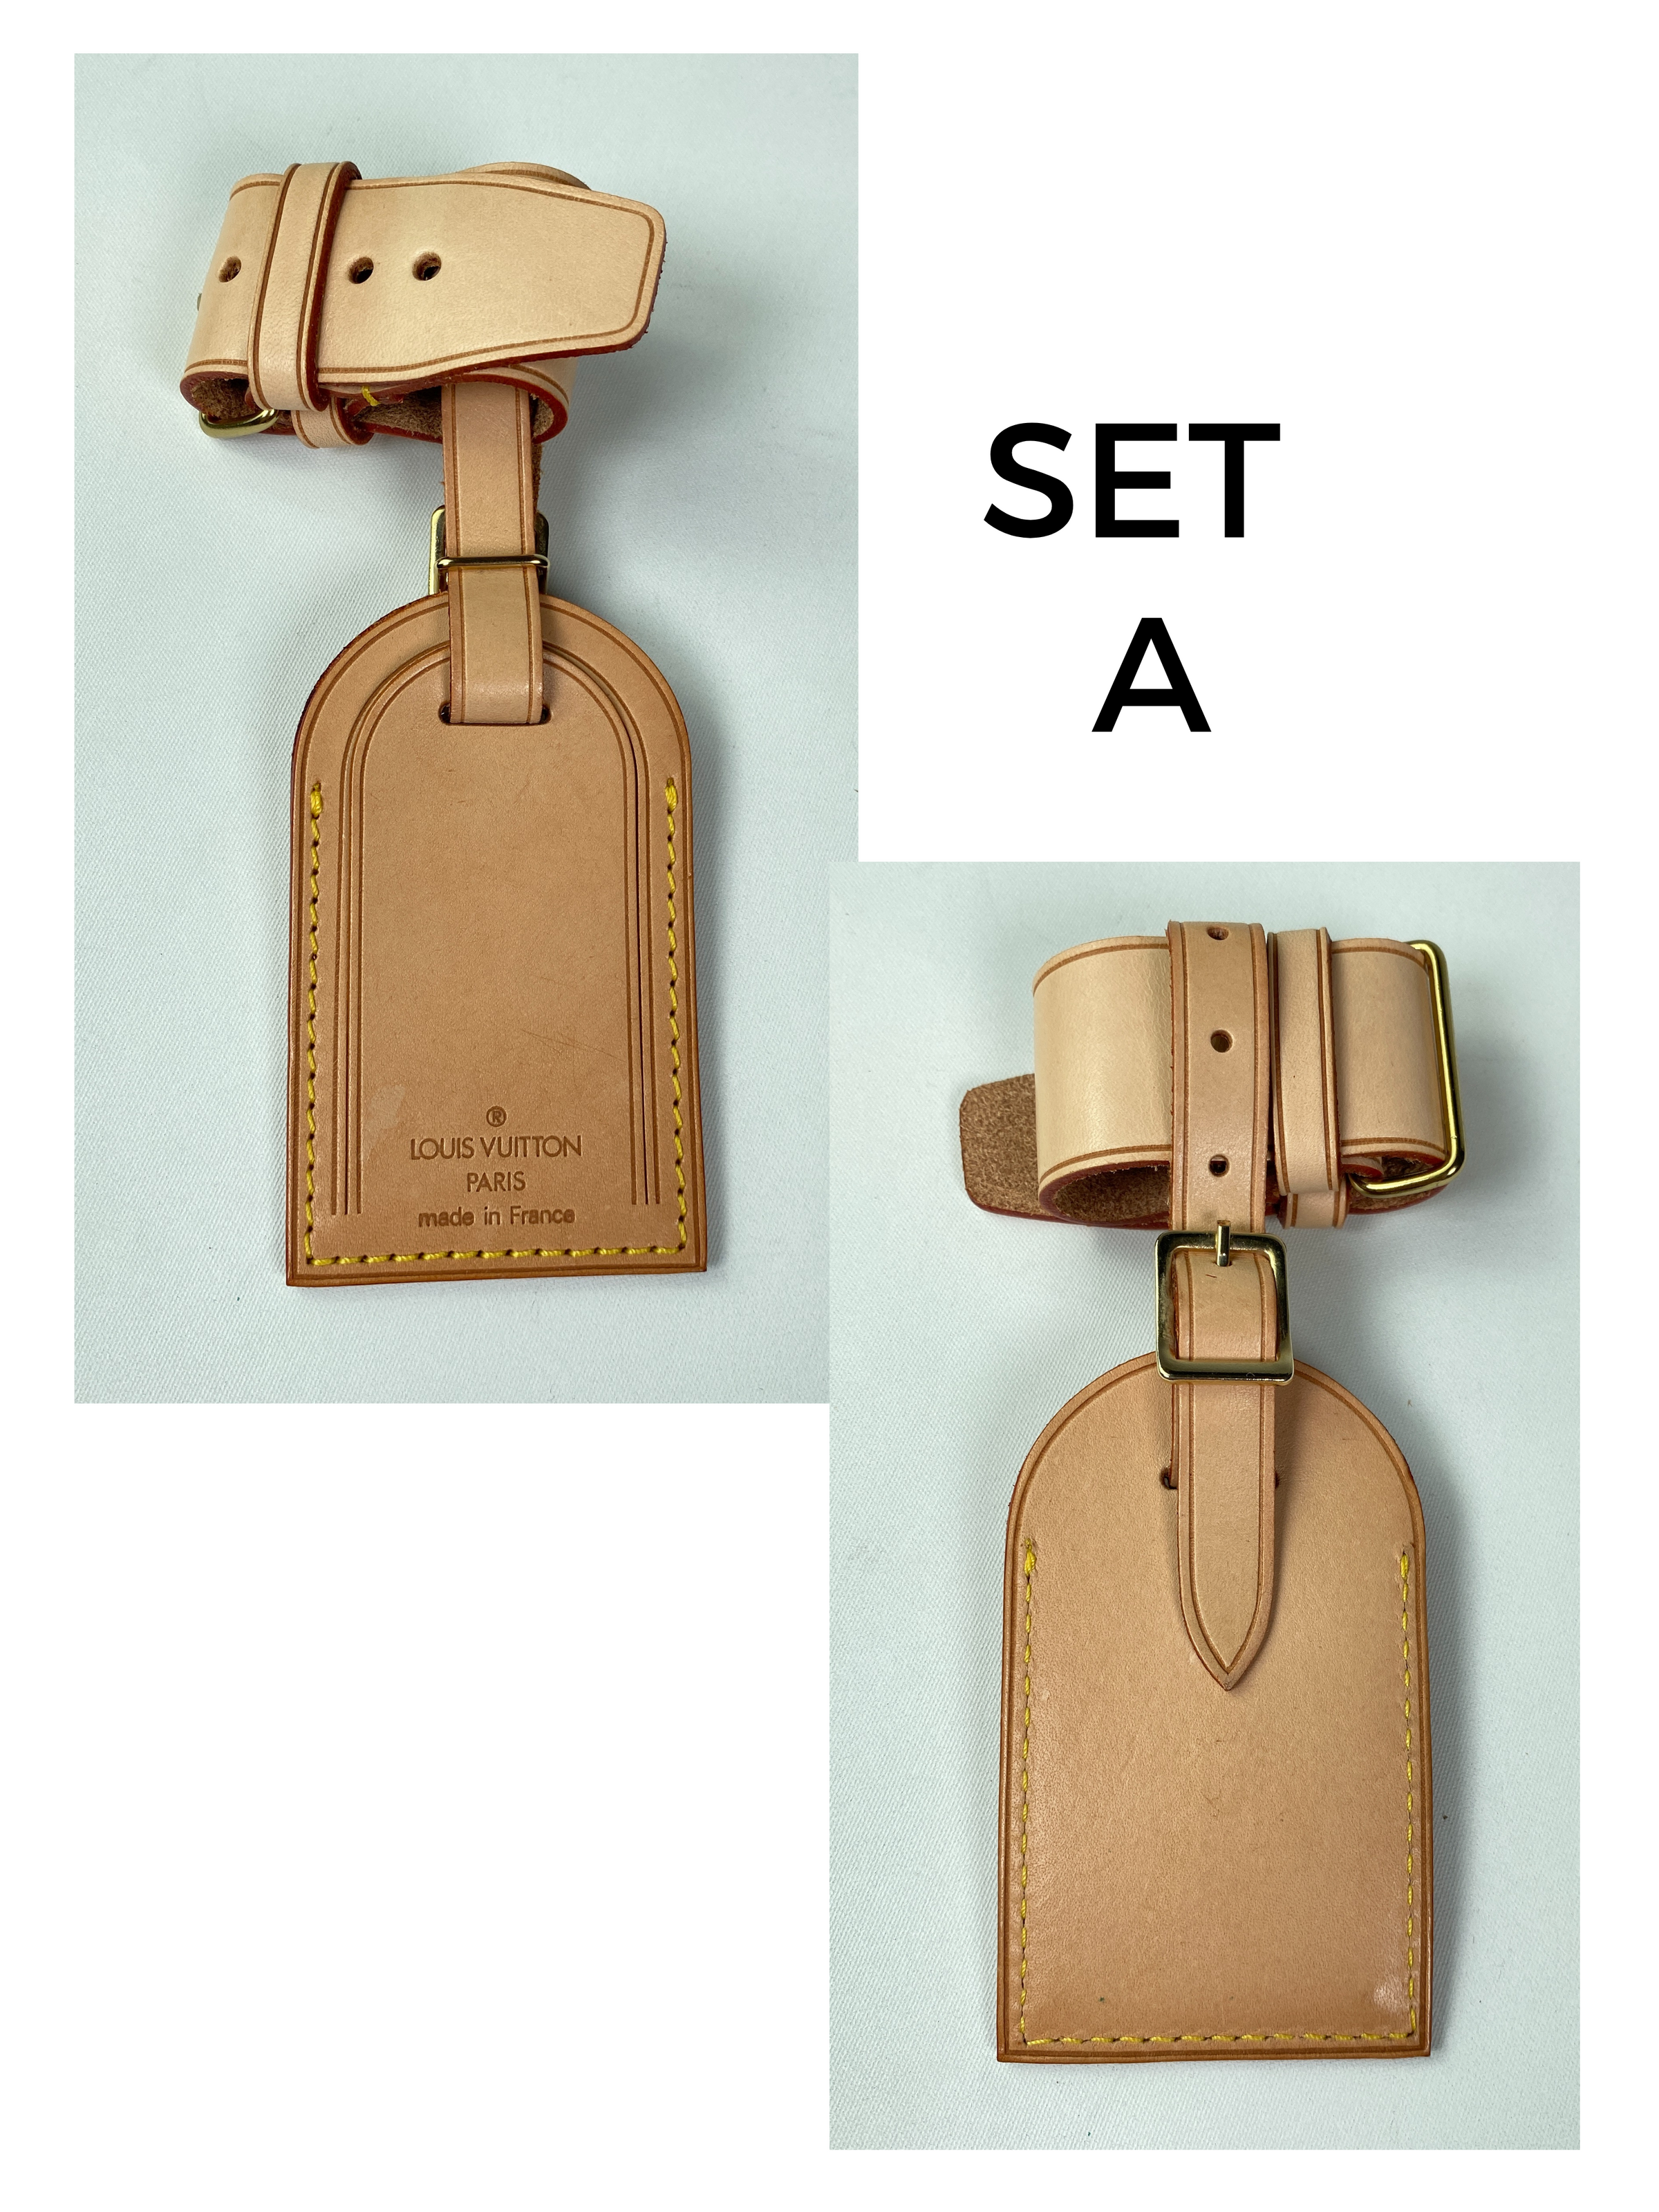 Louis Vuitton, Bags, Louis Vuitton Set Of 3 Customized Paris Luggage Tags  And Piognet